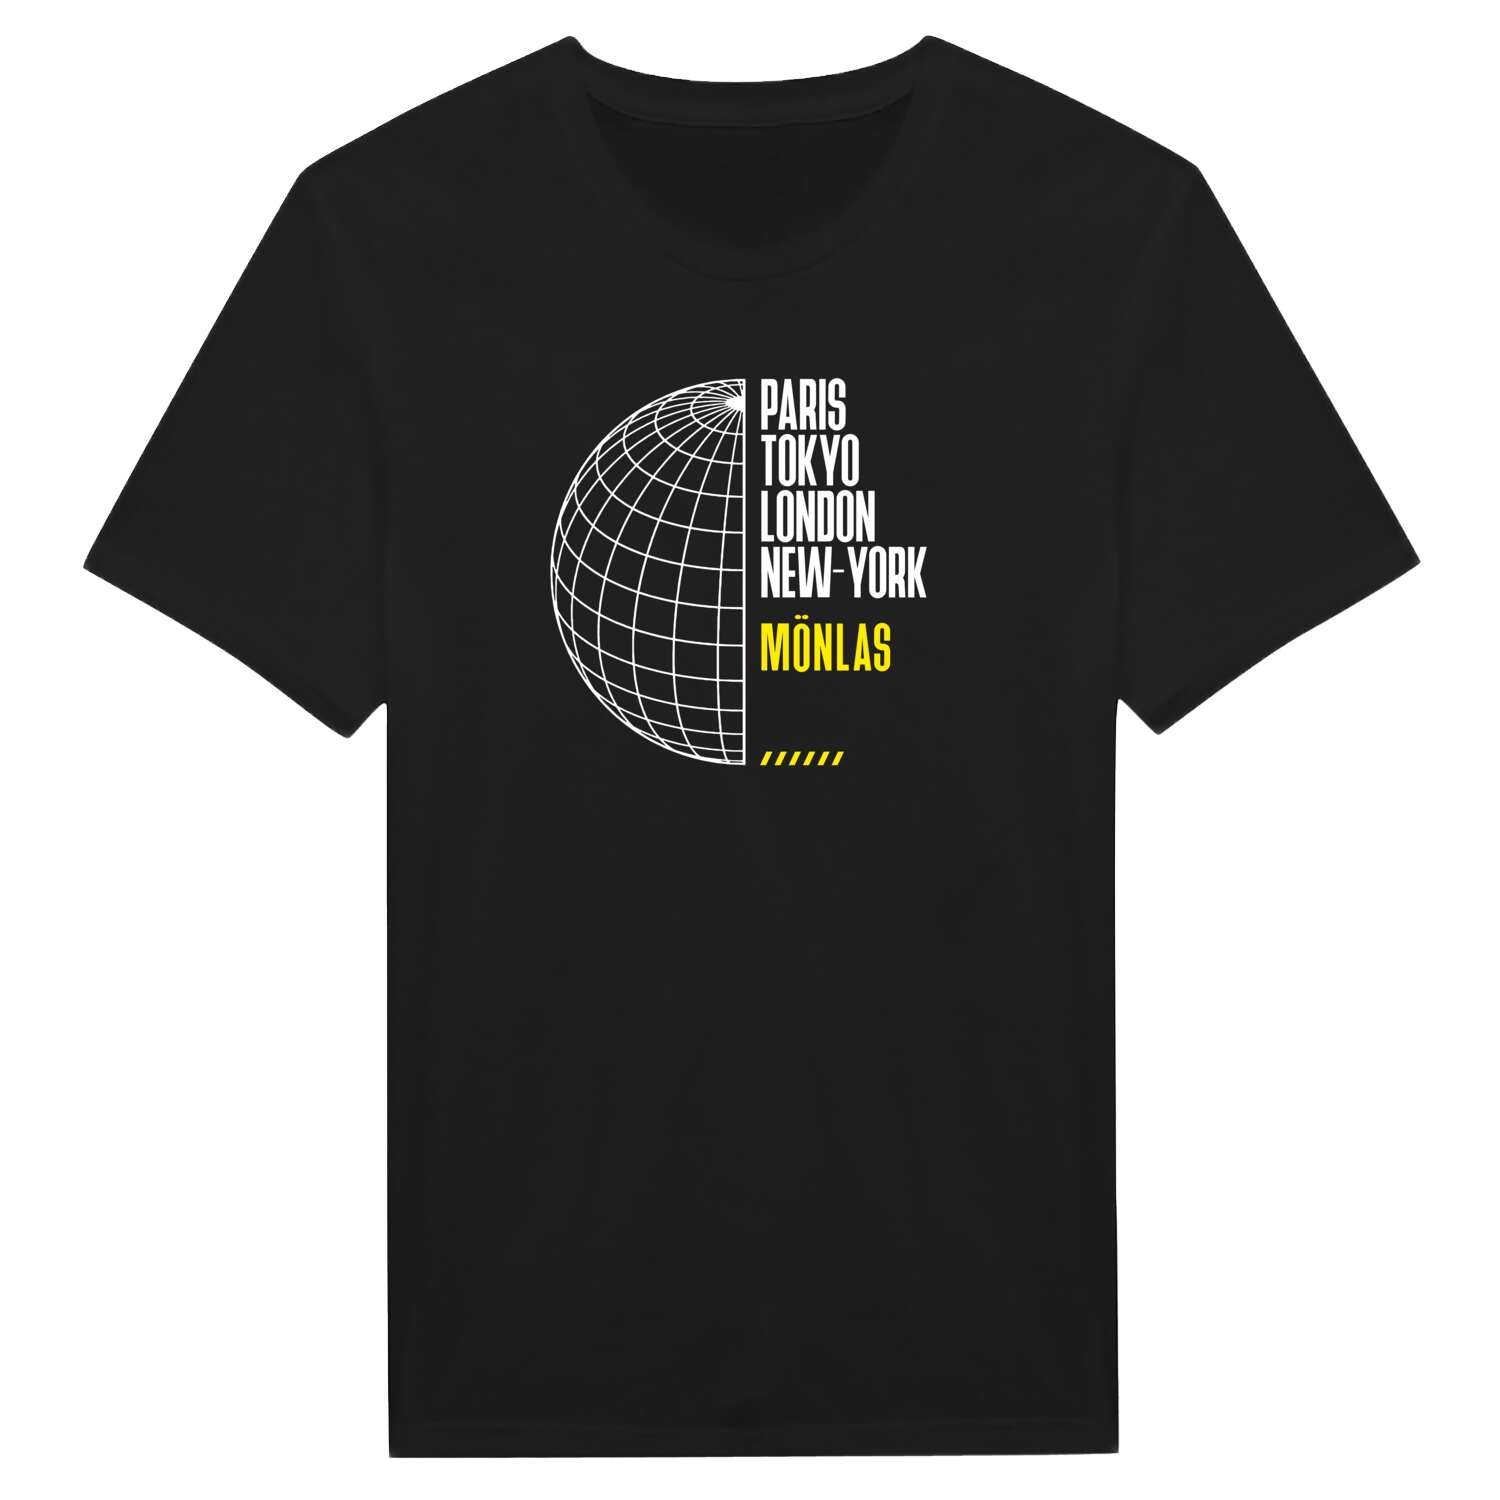 Mönlas T-Shirt »Paris Tokyo London«